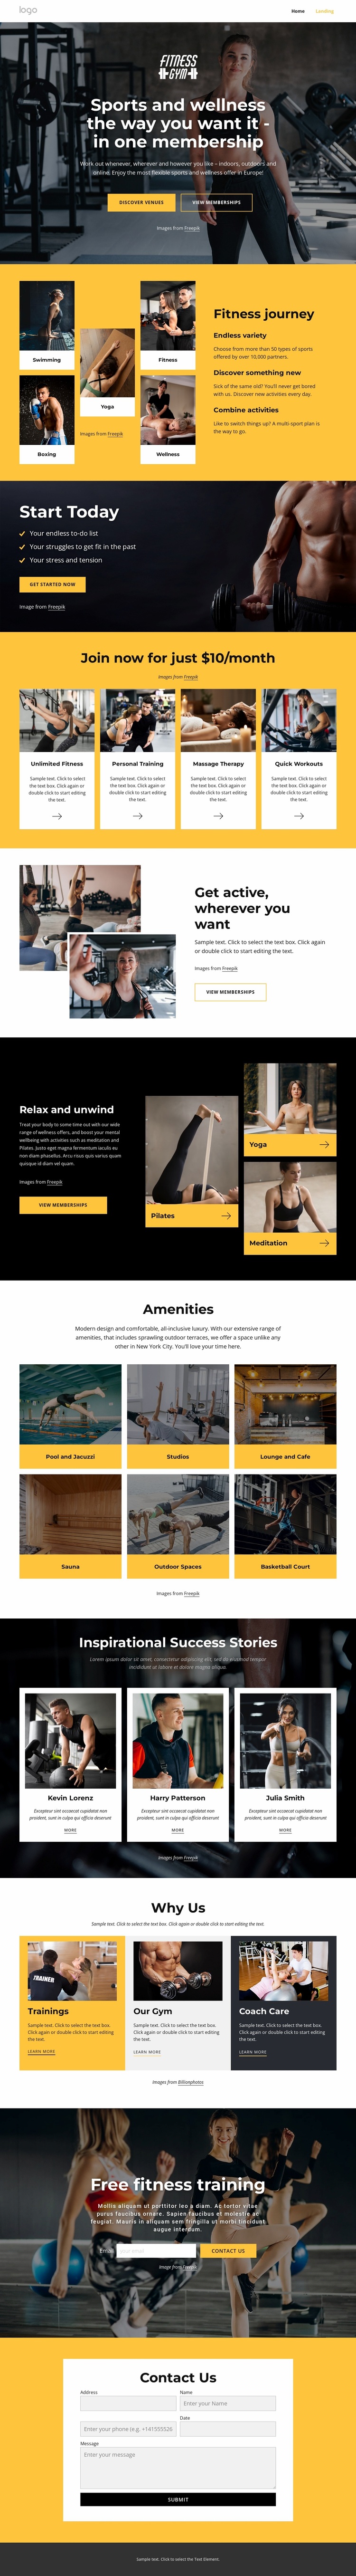 Gym, swimming, fitness classes Website Design